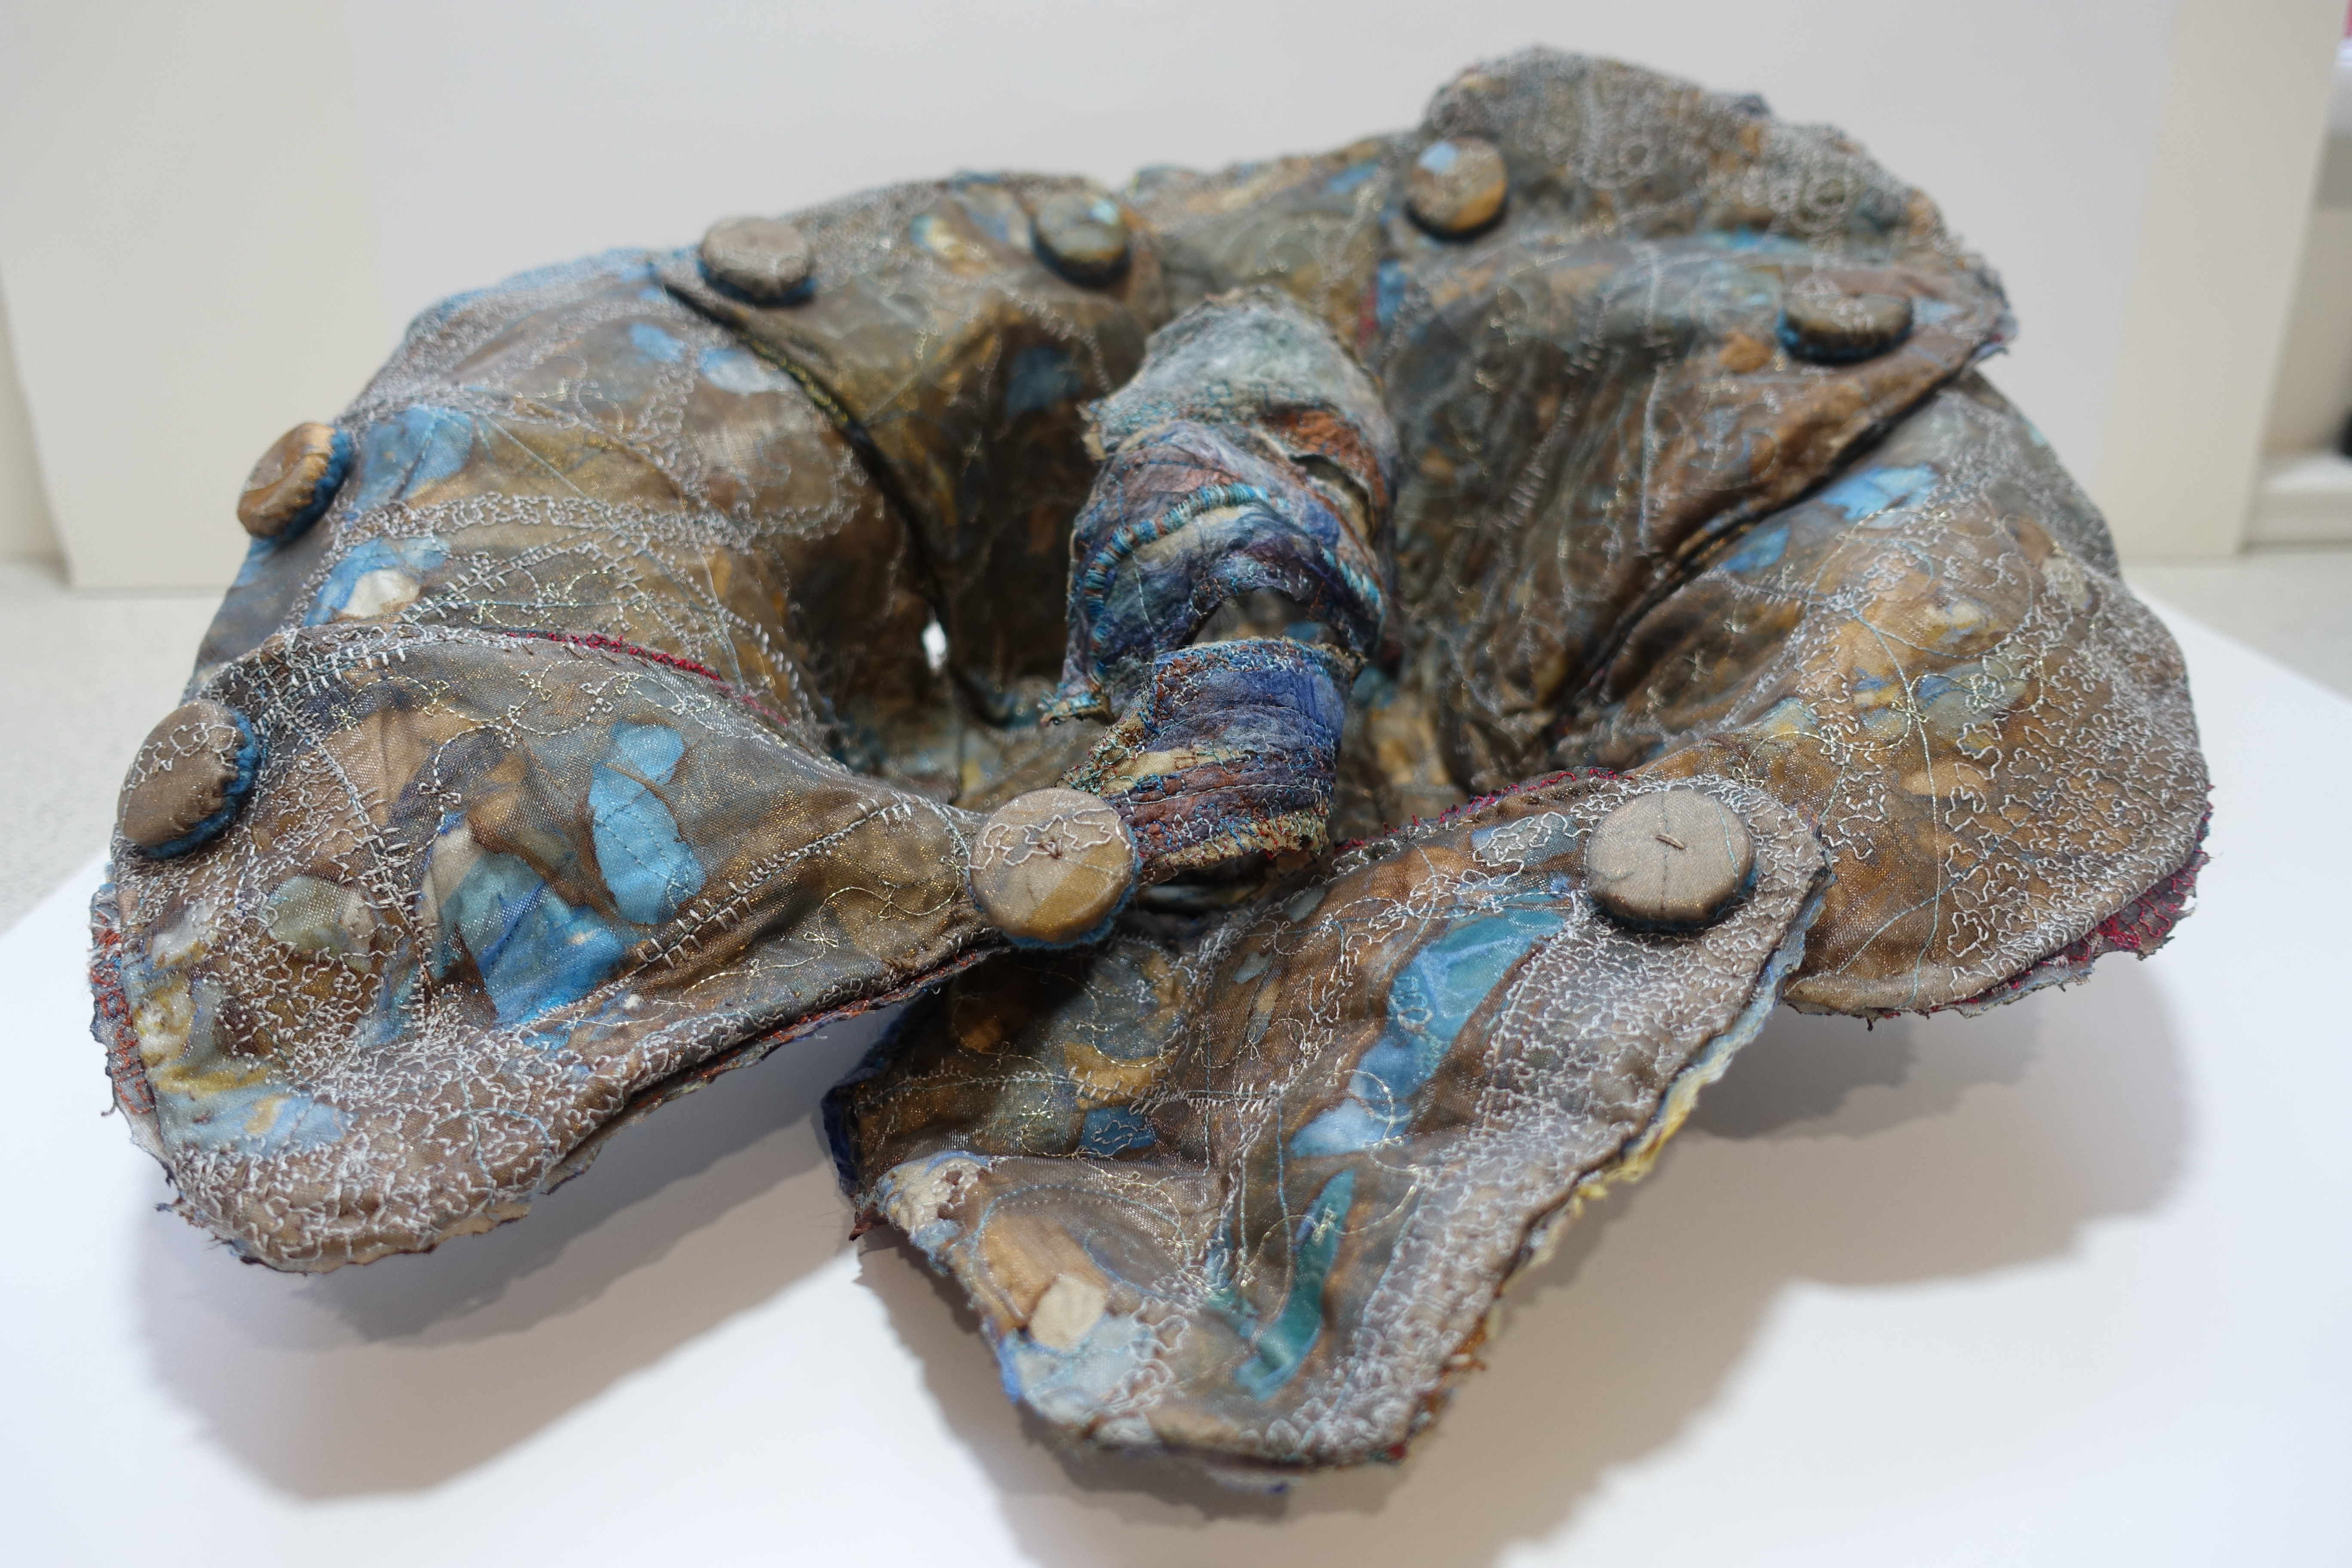 Title Conch Shell
Price £80
Size 40x34x16cm
3D Sculpture